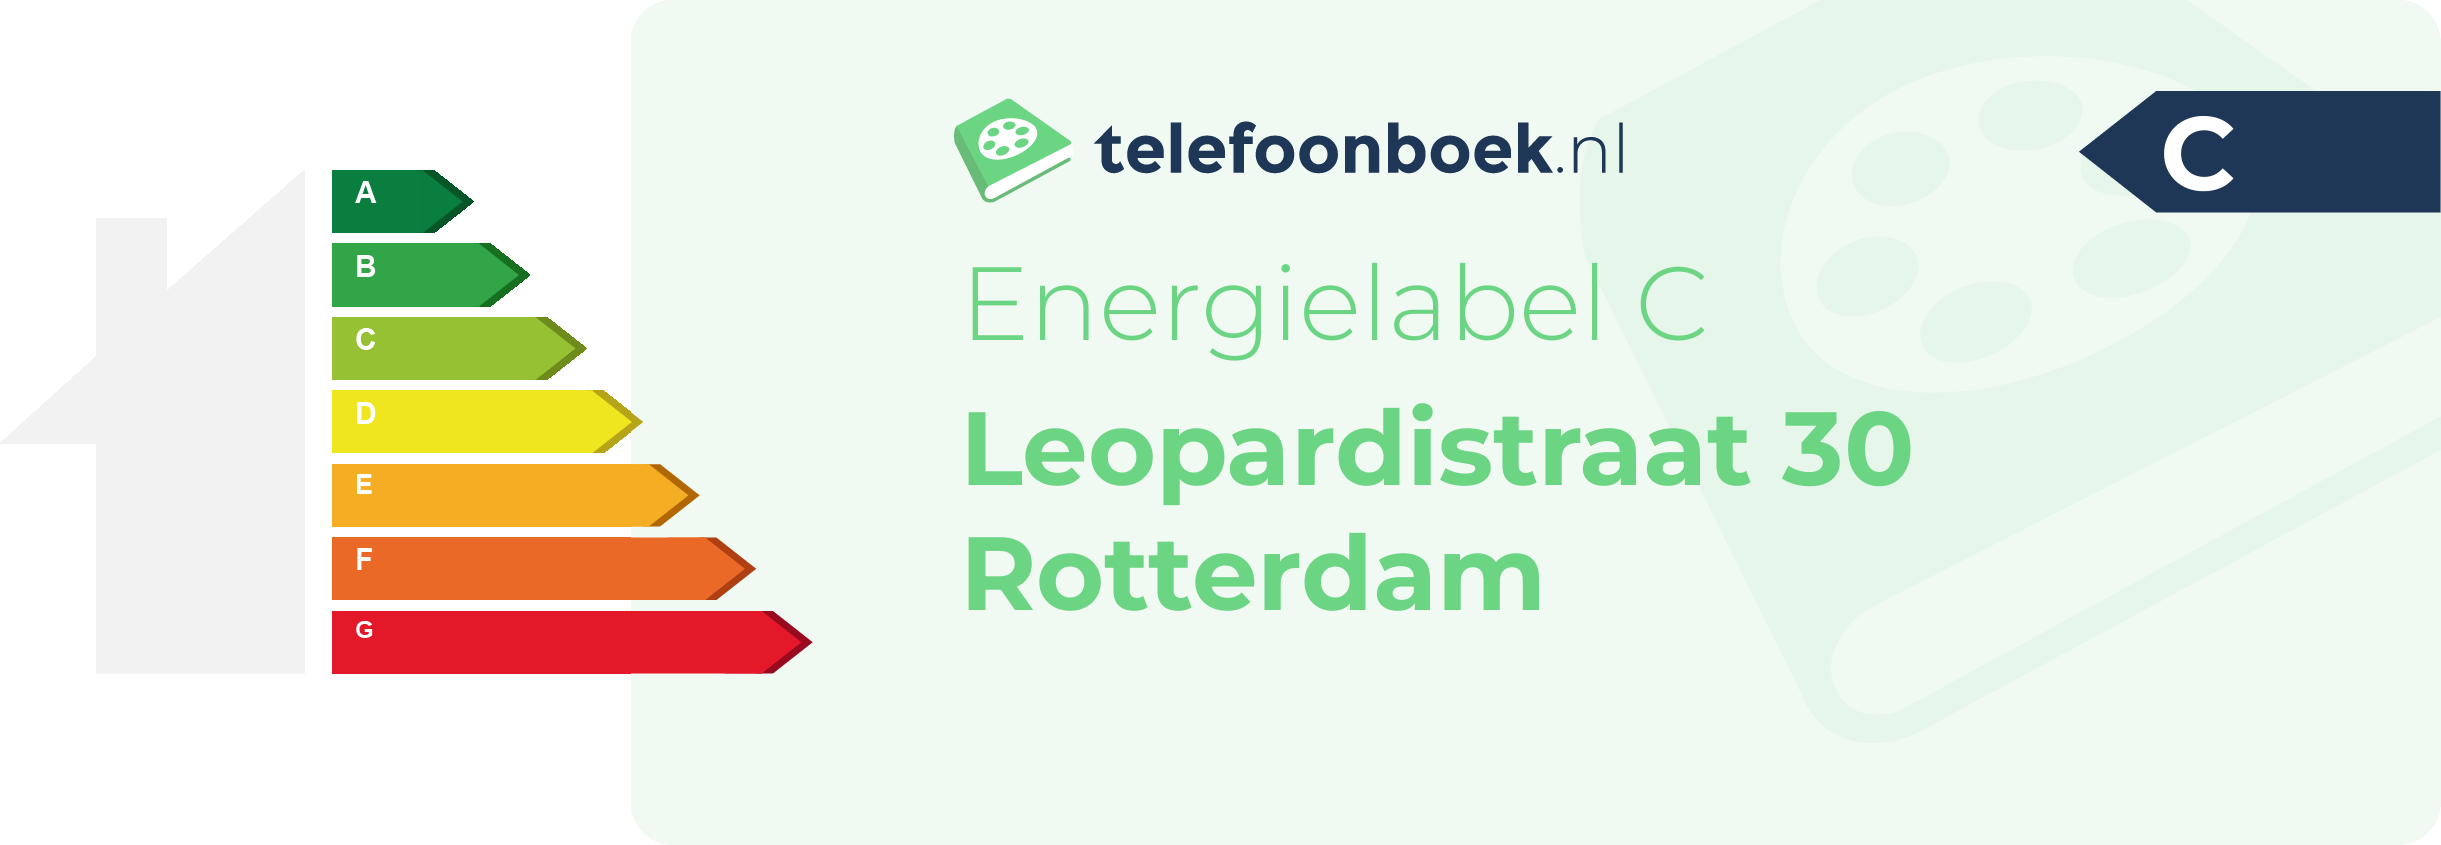 Energielabel Leopardistraat 30 Rotterdam